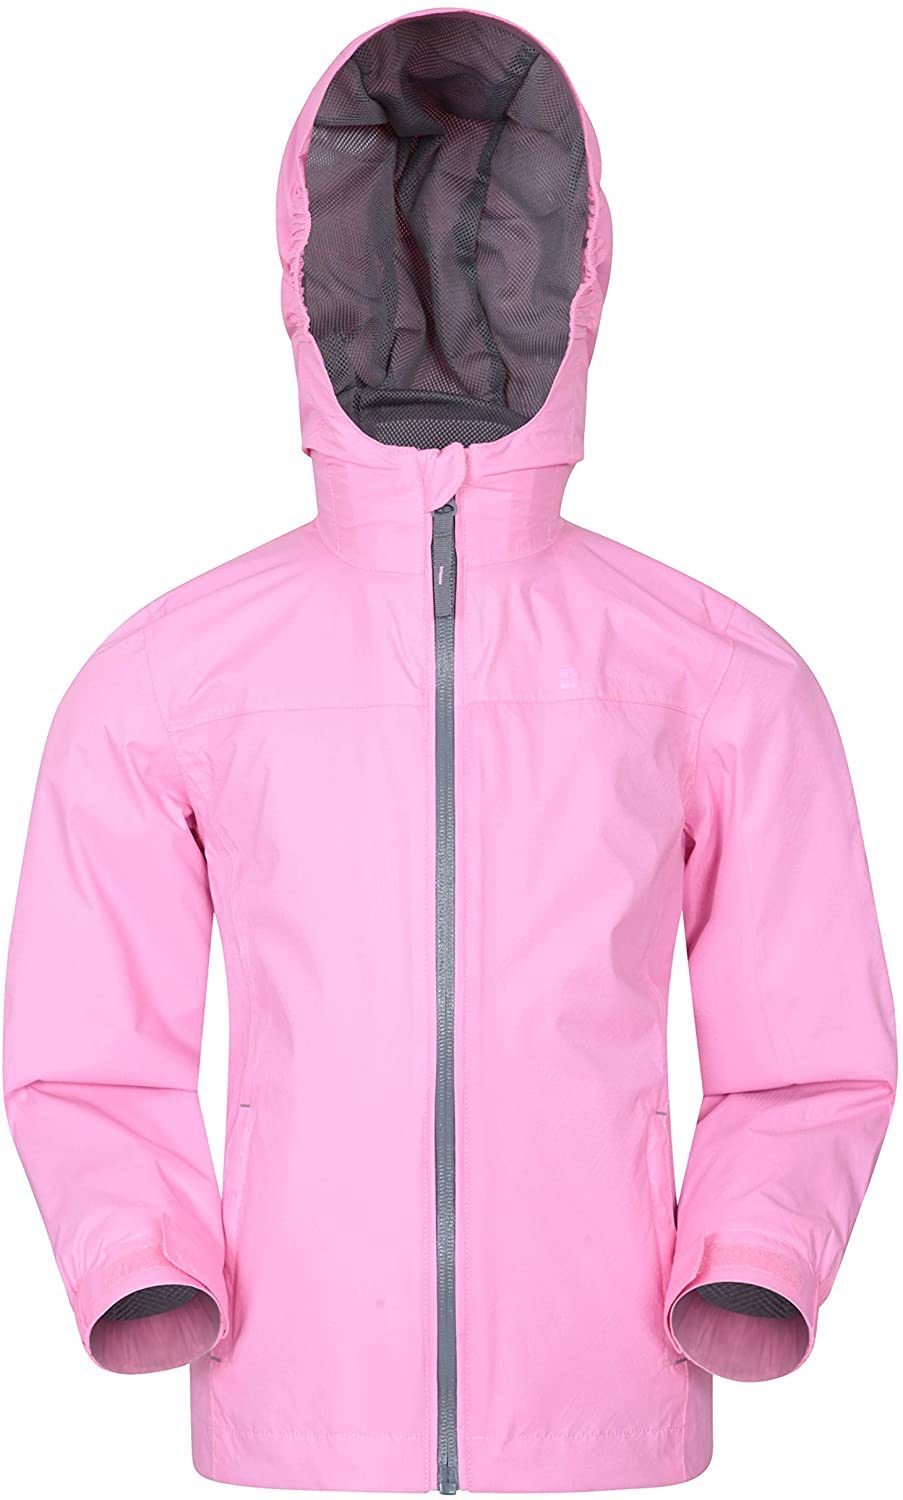 Kids Waterproof Rain Jacket - Taped Seams Raincoat, Lightweight, Breathable, Girls & Boys Rainwear